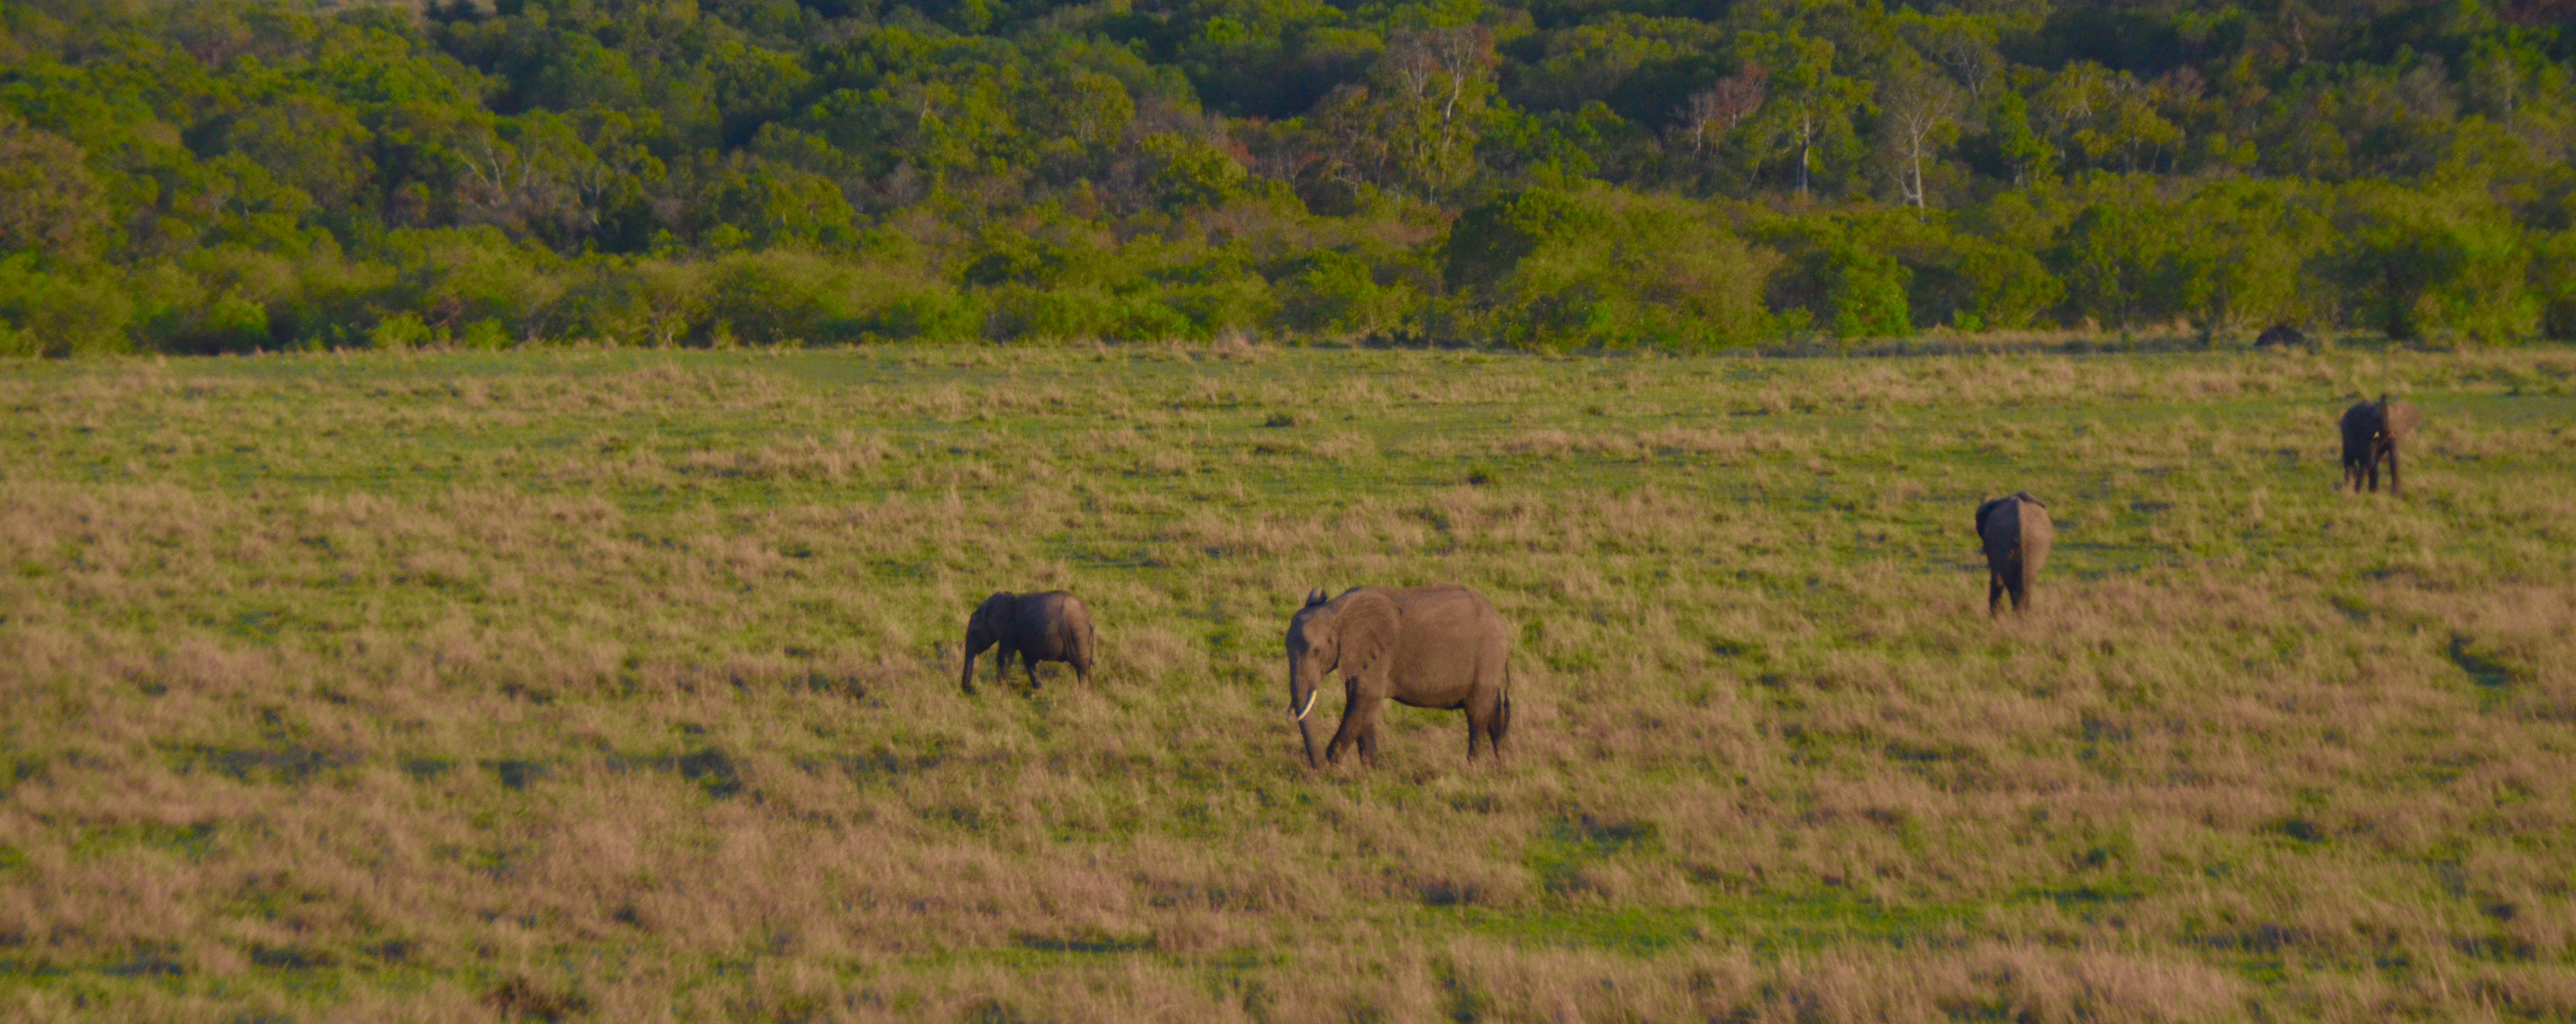 Elephants on the Move, Masai Mara